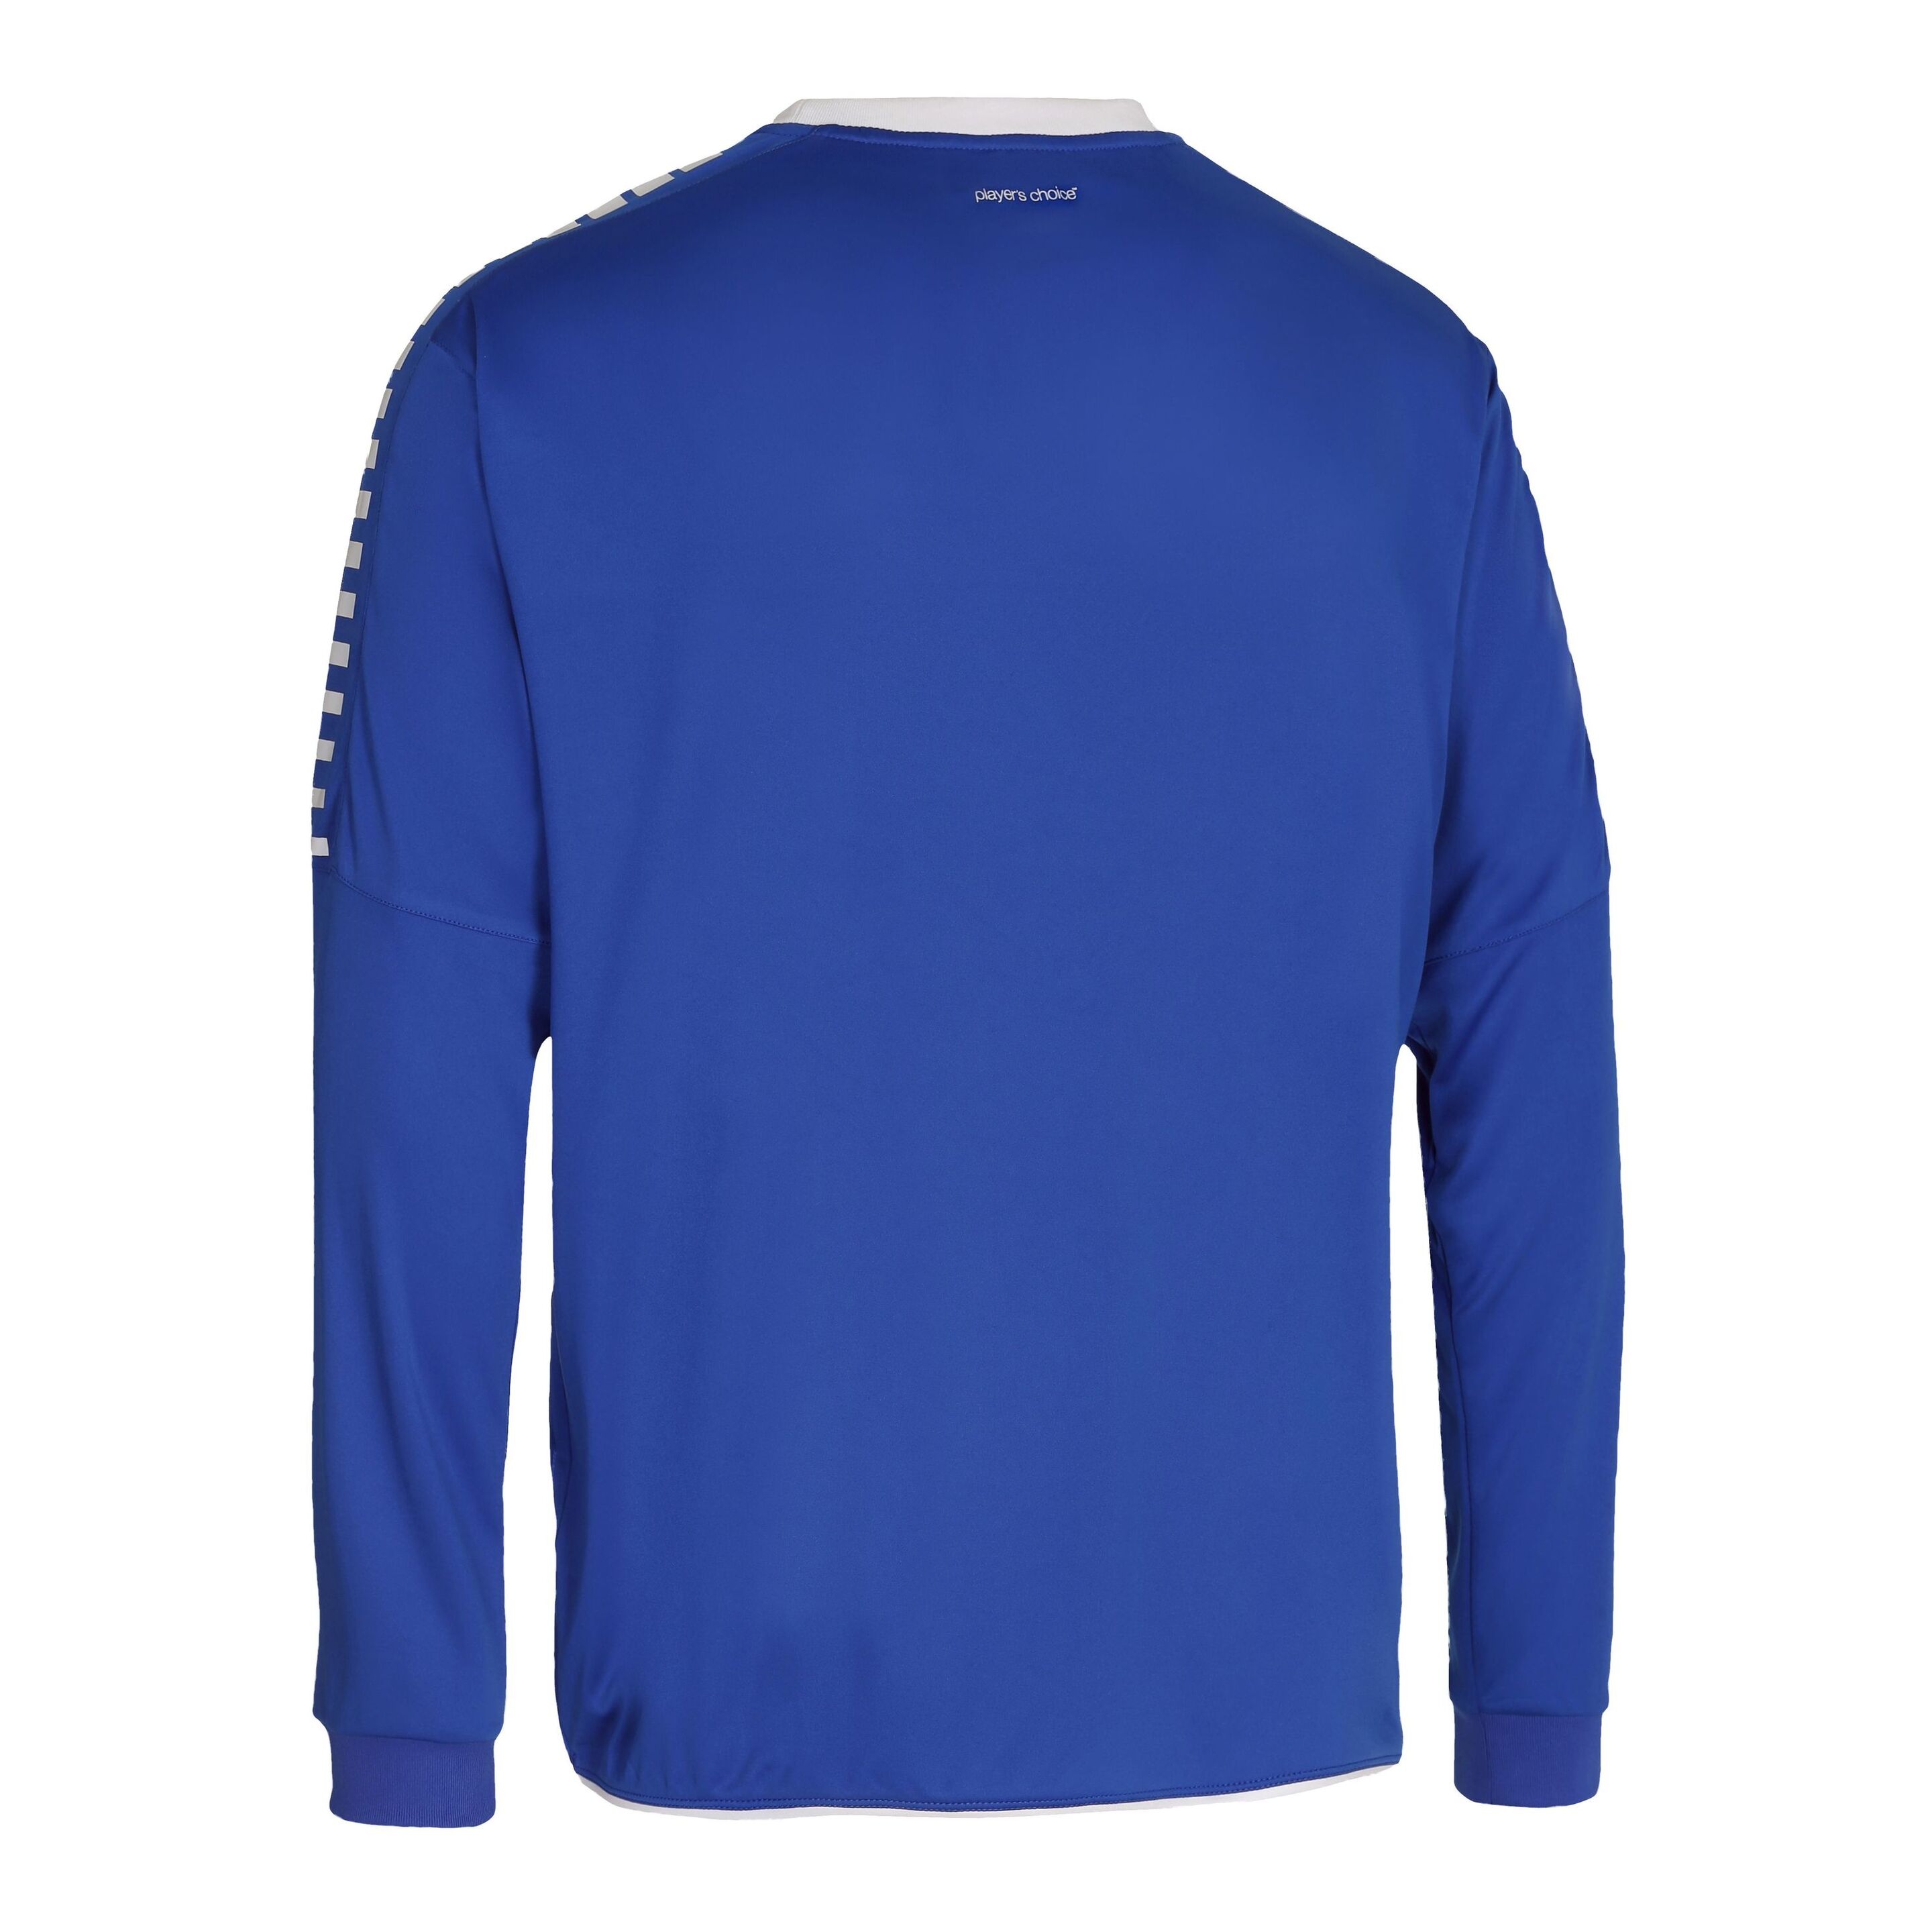 Seleccione La Camiseta De Manga Larga De Argentina - Azul - Camiseta Deportiva  MKP